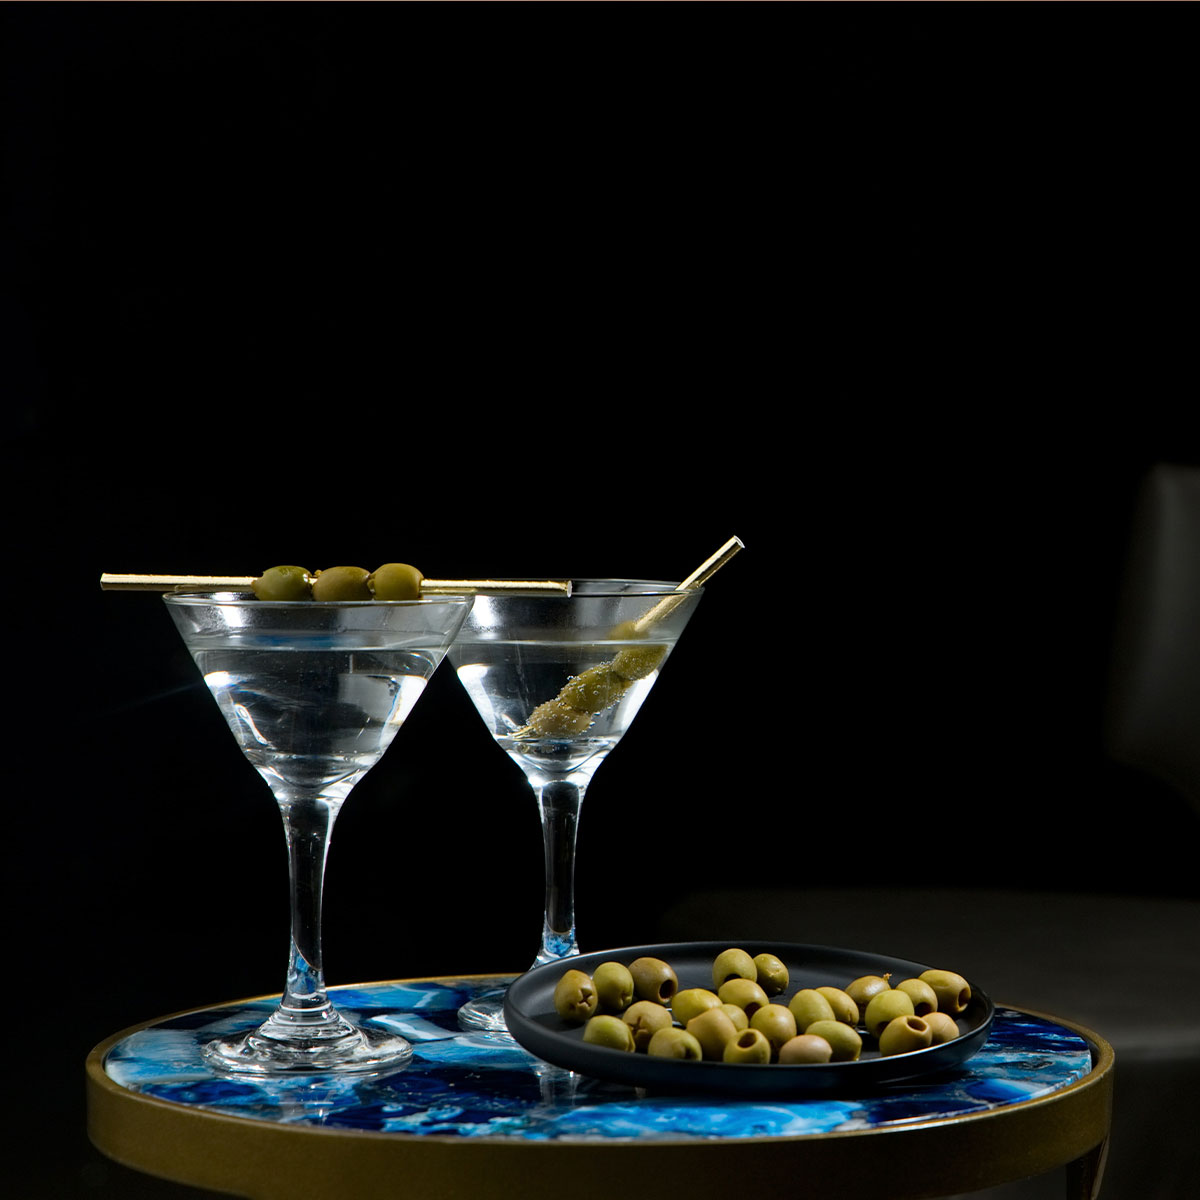 Dry martini